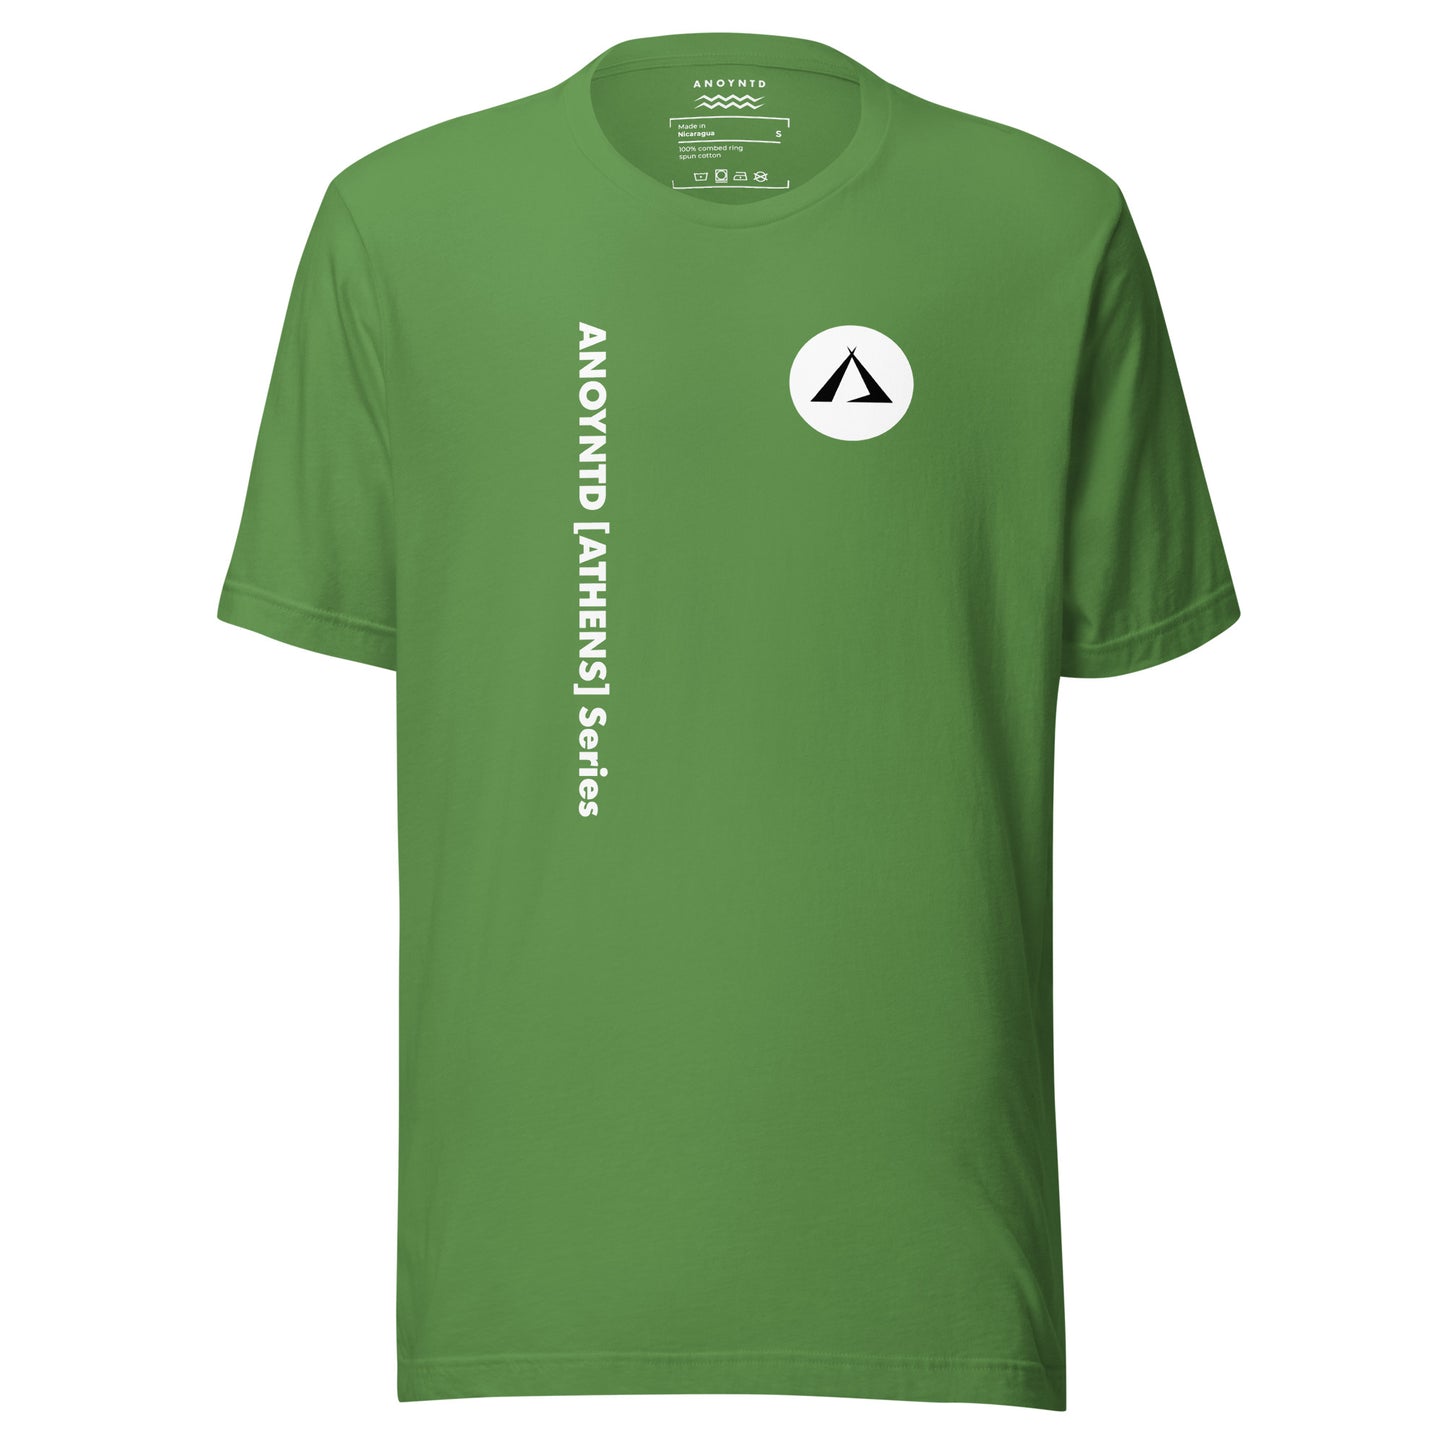 ANOYNTD [ATHENS] Series Unisex t-shirt